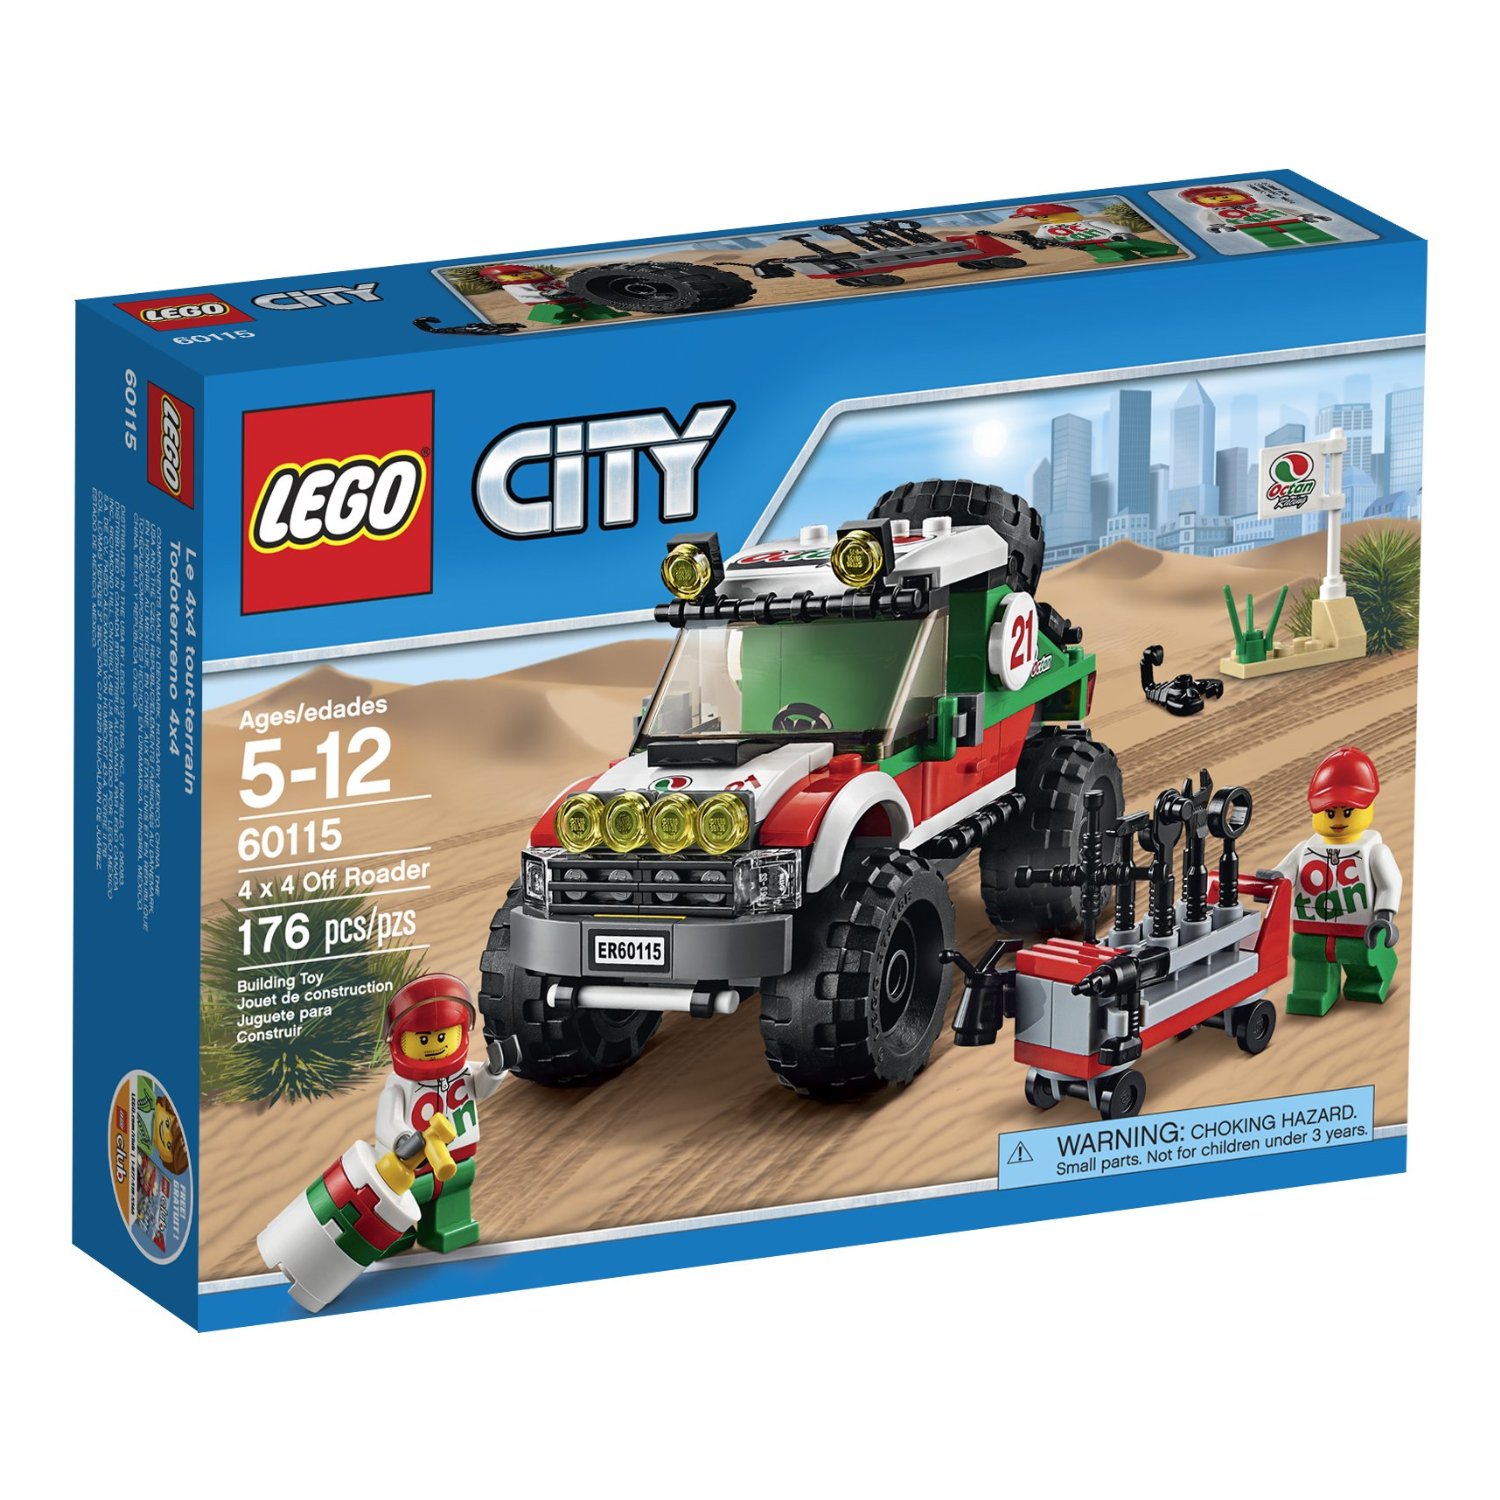 LEGO CITY 4 x 4 Off Roader – Just $13.99!